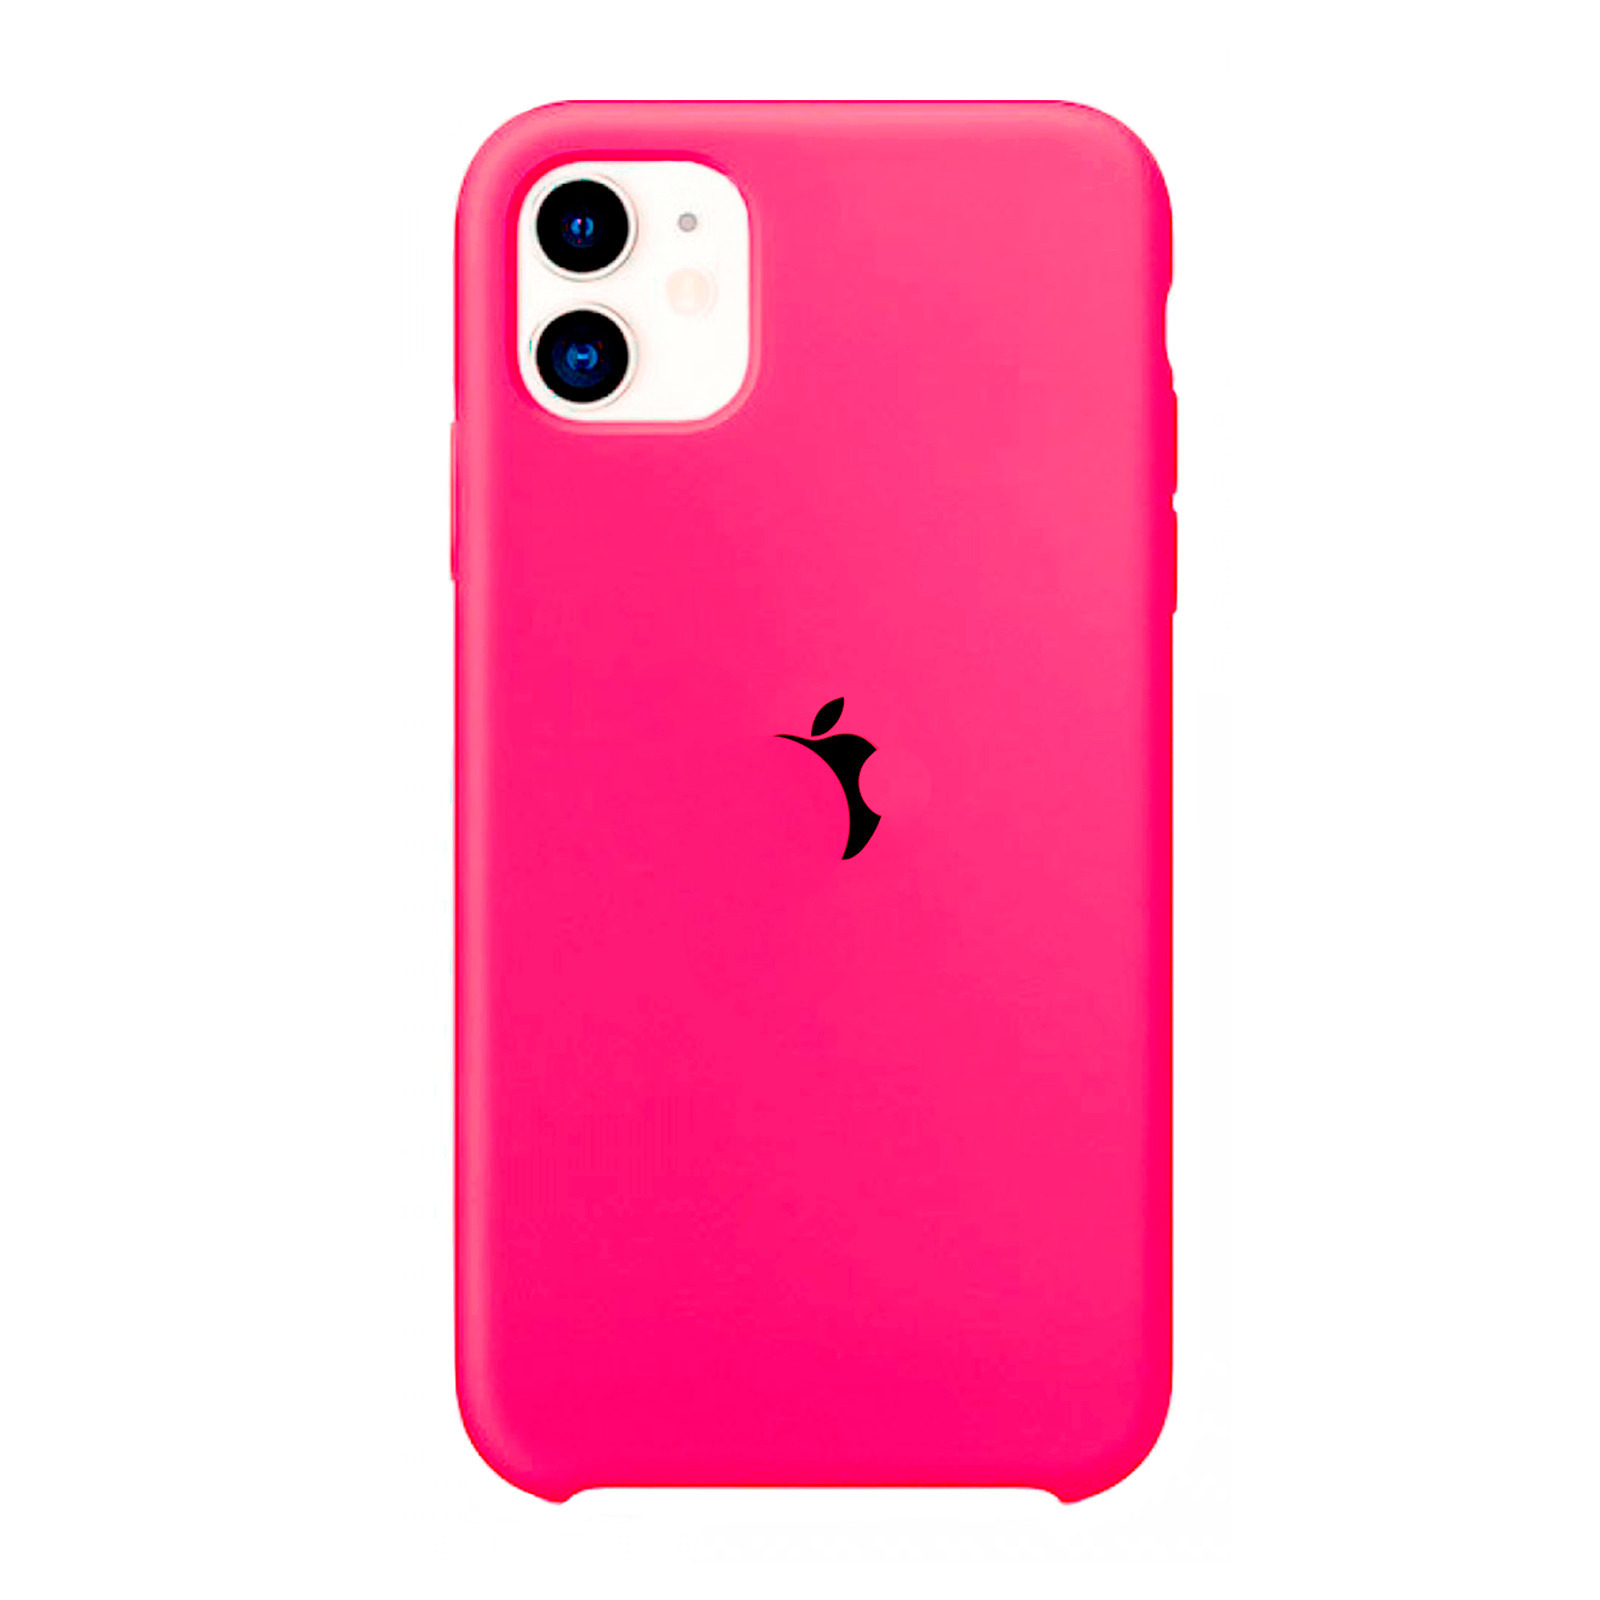 Чехол розовый iphone. Чехол на айфон 11. Iphone 11 Pink. Iphone 11 Silicone Case Cactus (mxyw2zm/a). Розовый чехол на айфон 11.